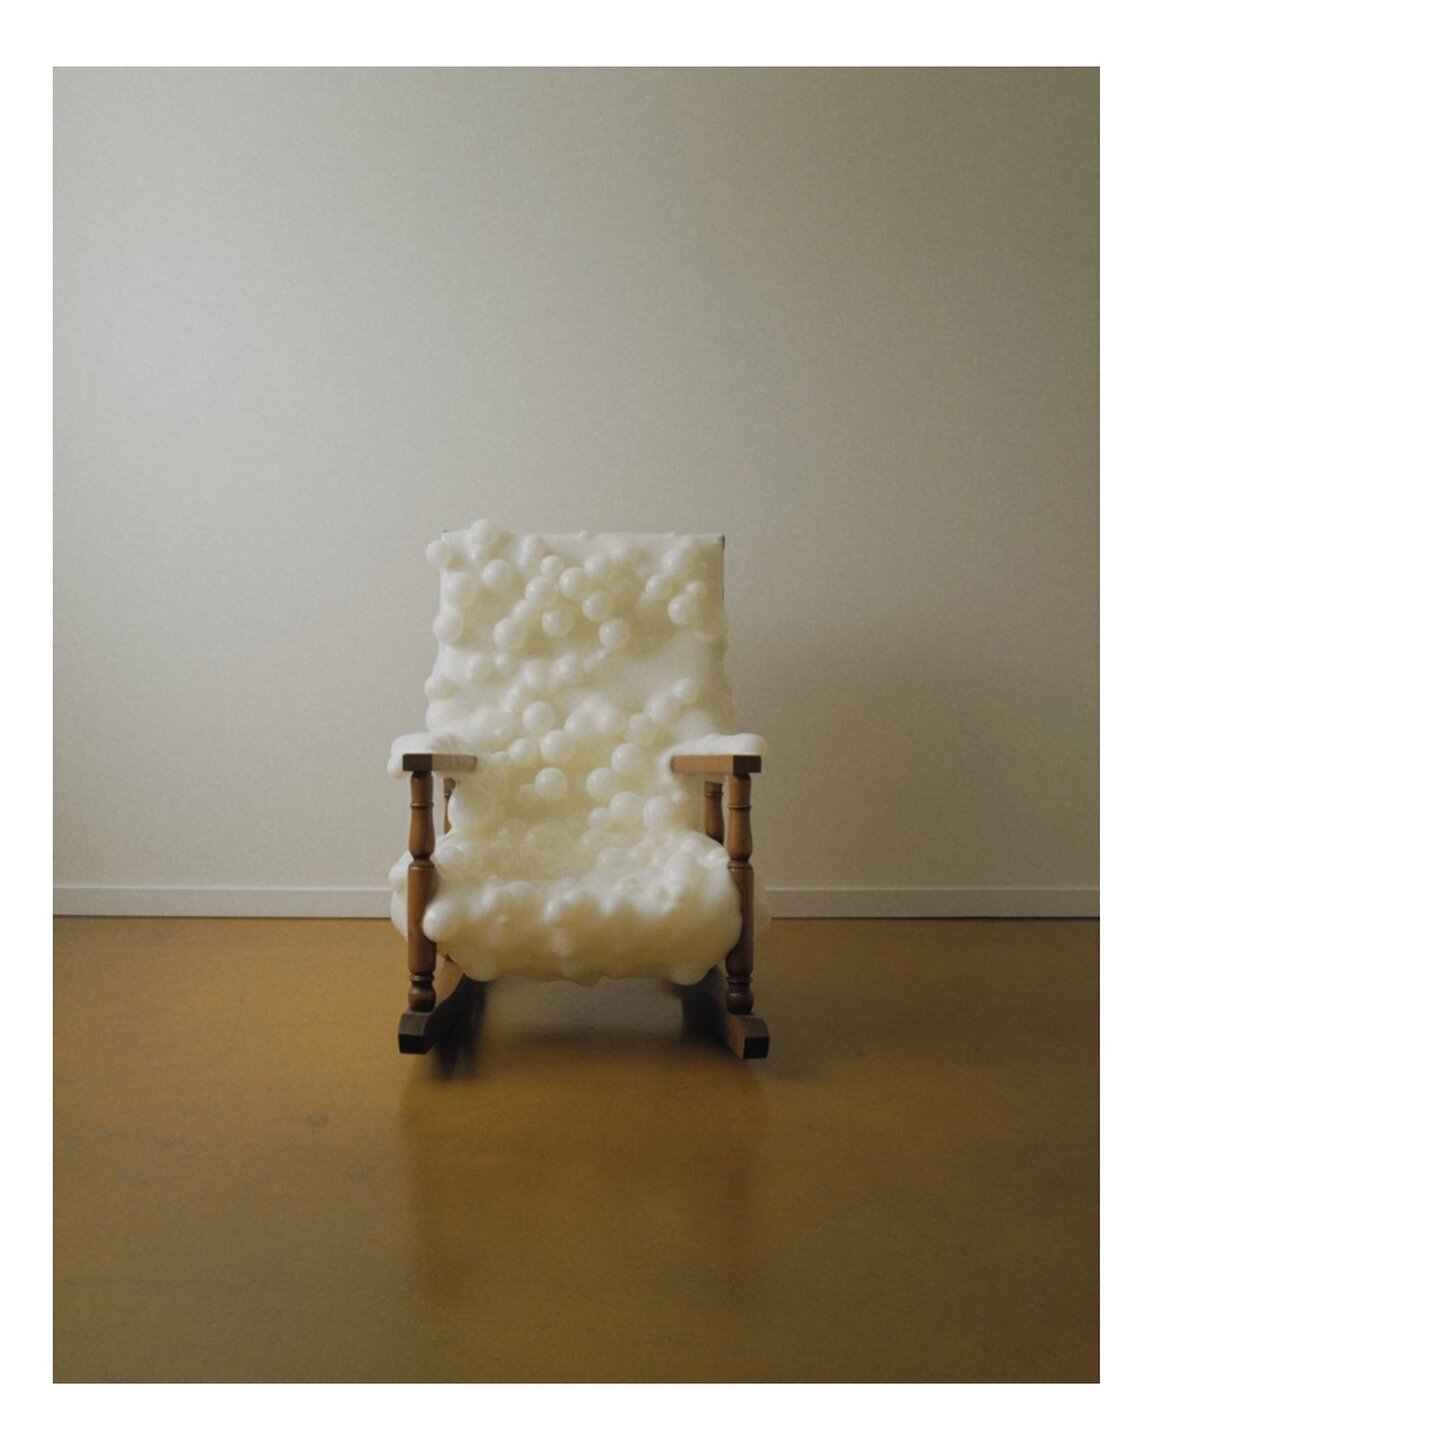 ARTIF |  Effervescent Rocking Chair
.
.
A creative concept based on the Brutalist Rocking Chair
@elisapesch__
.
.
.
.
.

#vintagefurniture #vintage #interiordesign #brutalism #midcenturymodern #midcentury #midcenturyfurniture #antiquefurniture #mcm #